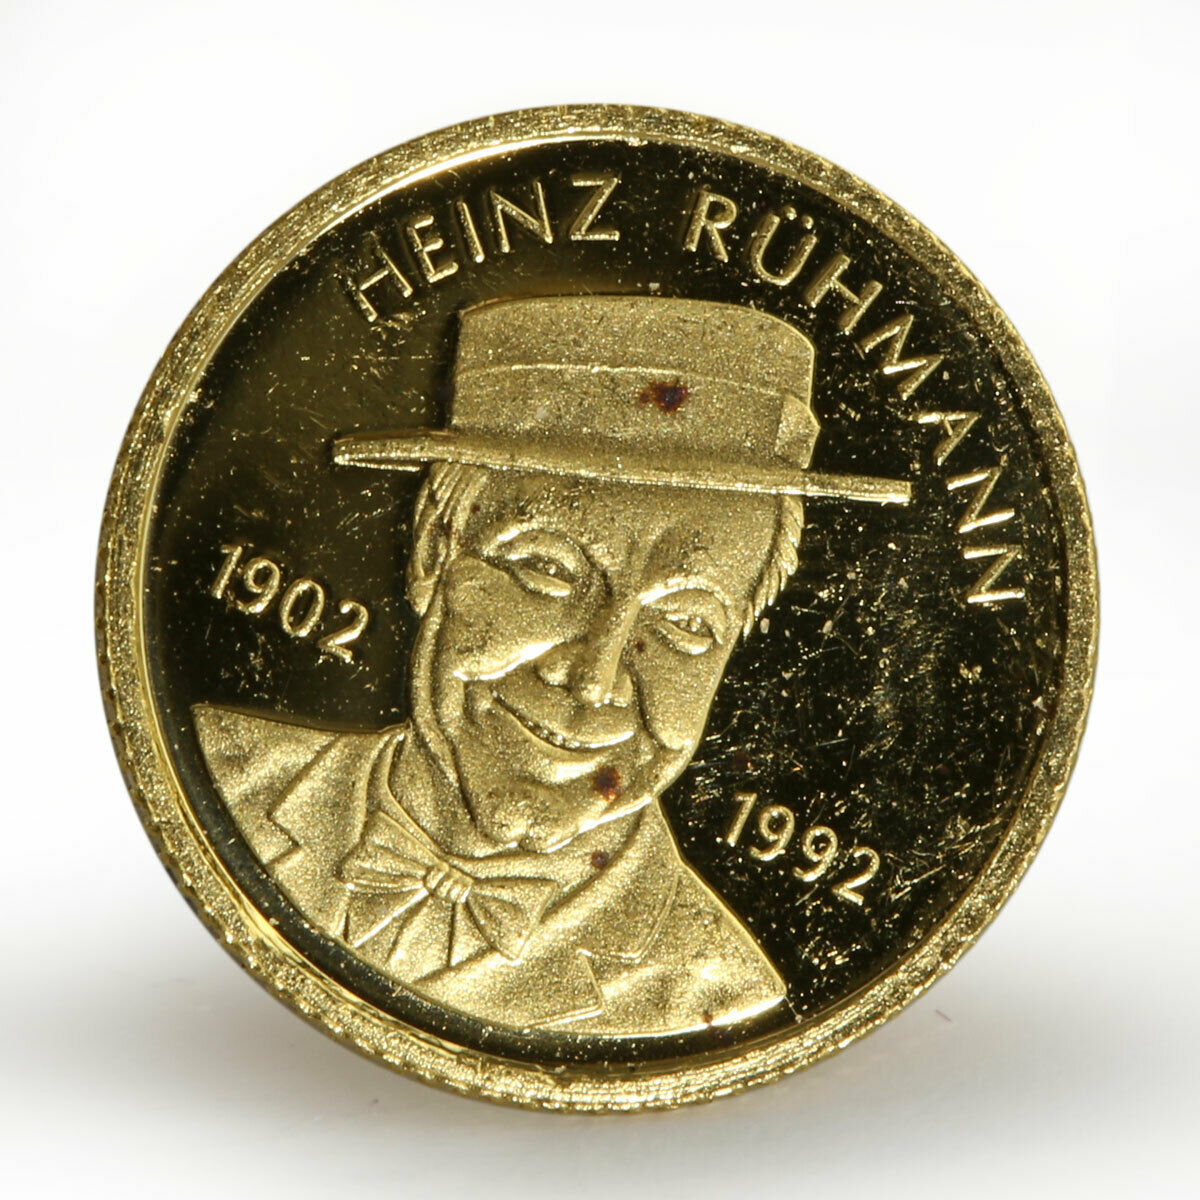 Somalia 250 shillings Heinz Ruhmann proof gold coin 2002